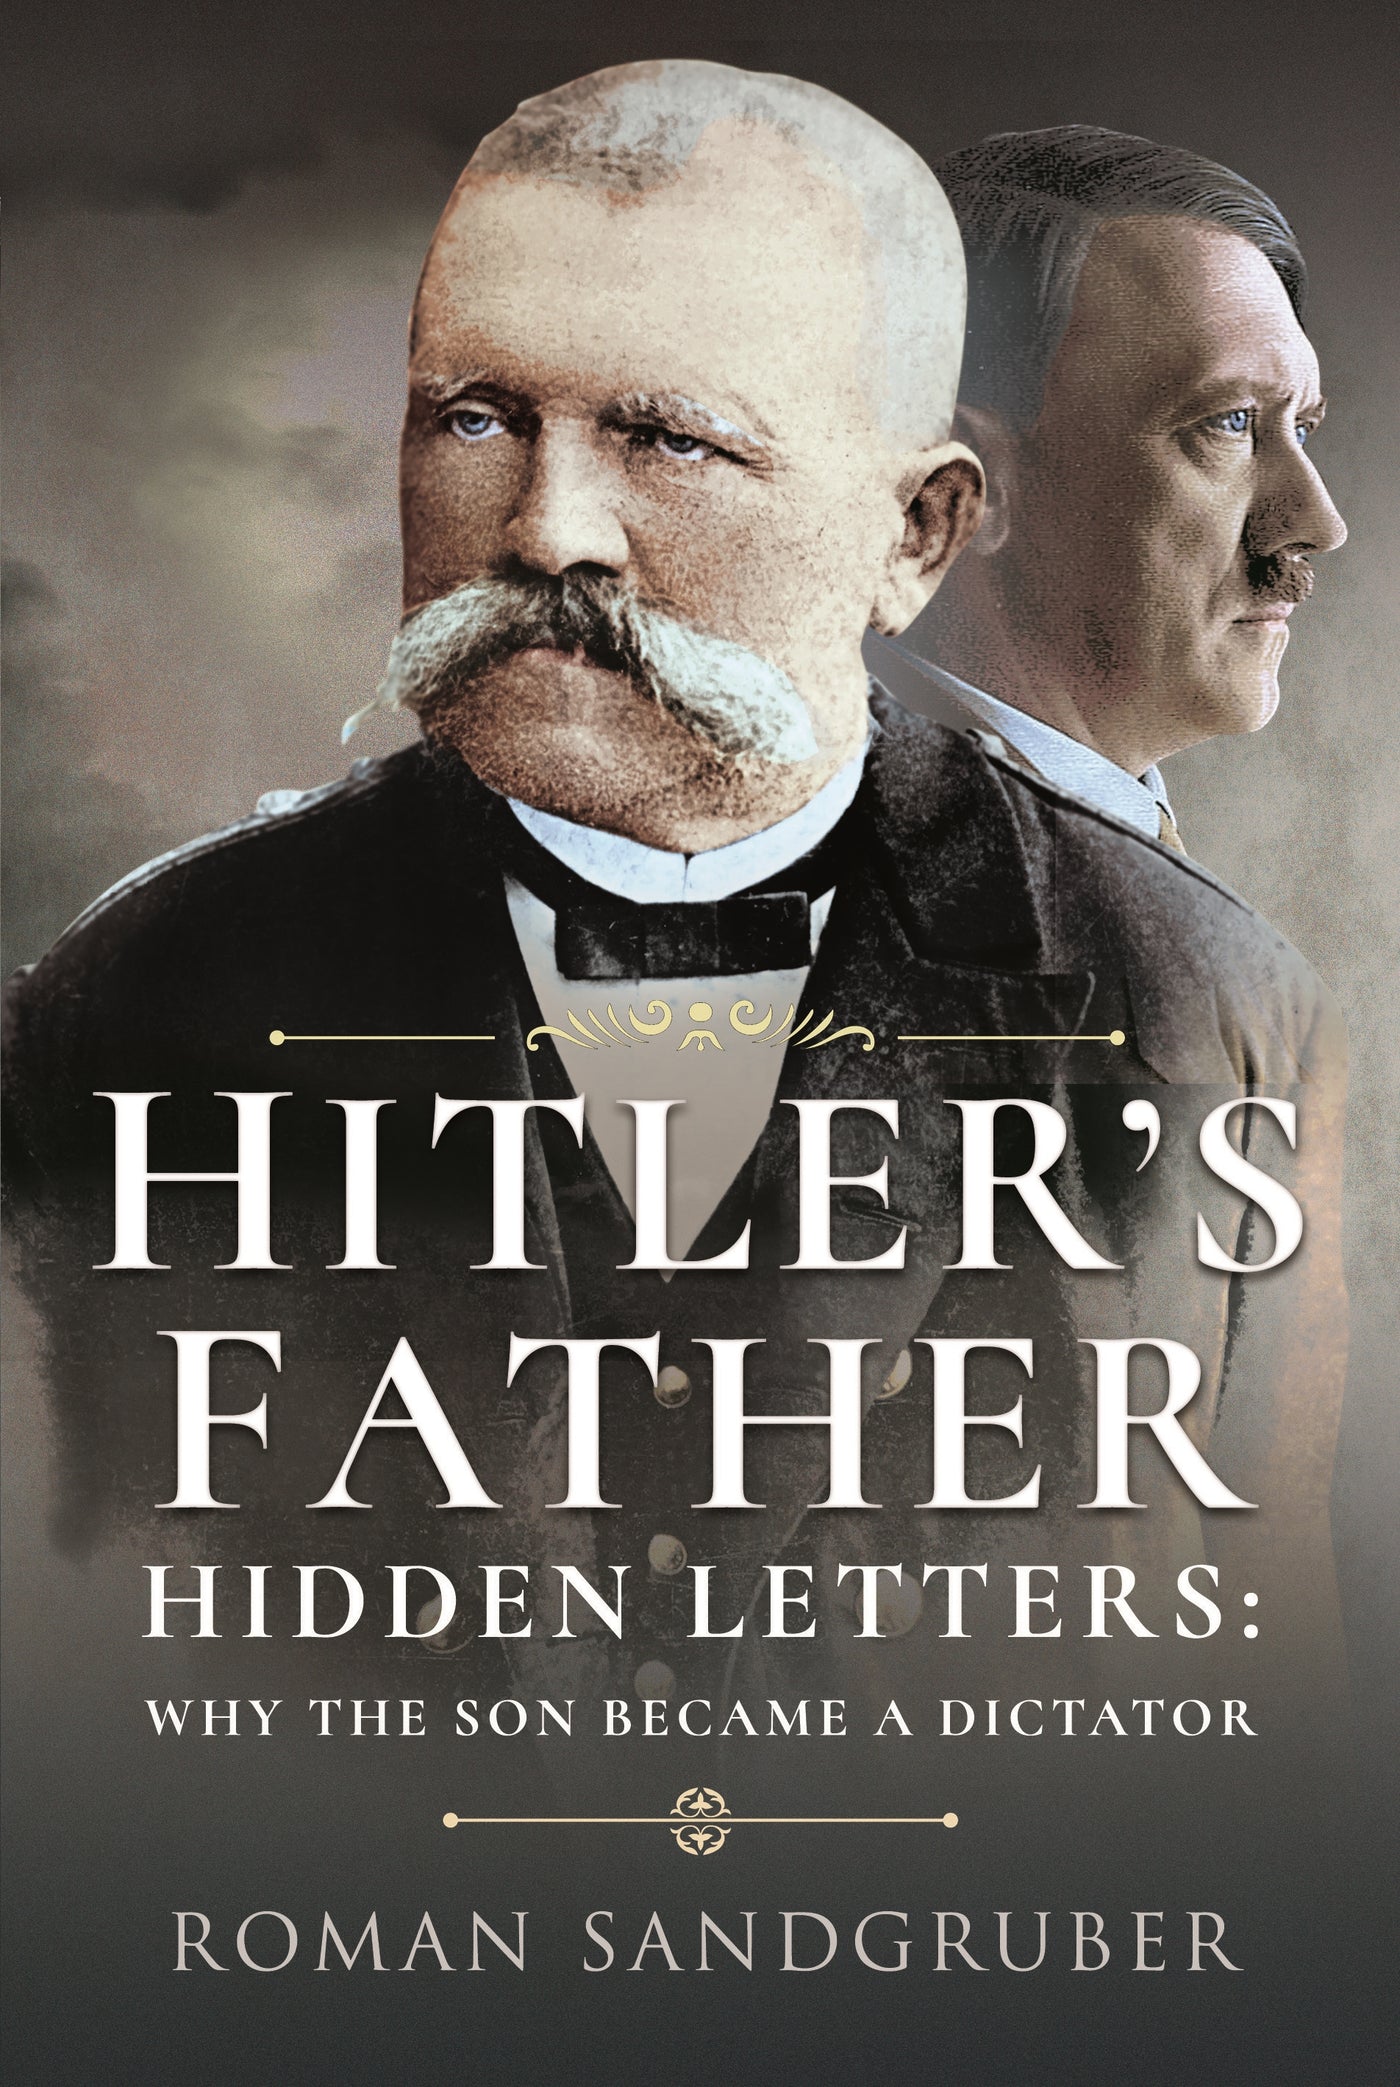 Hitler's Father